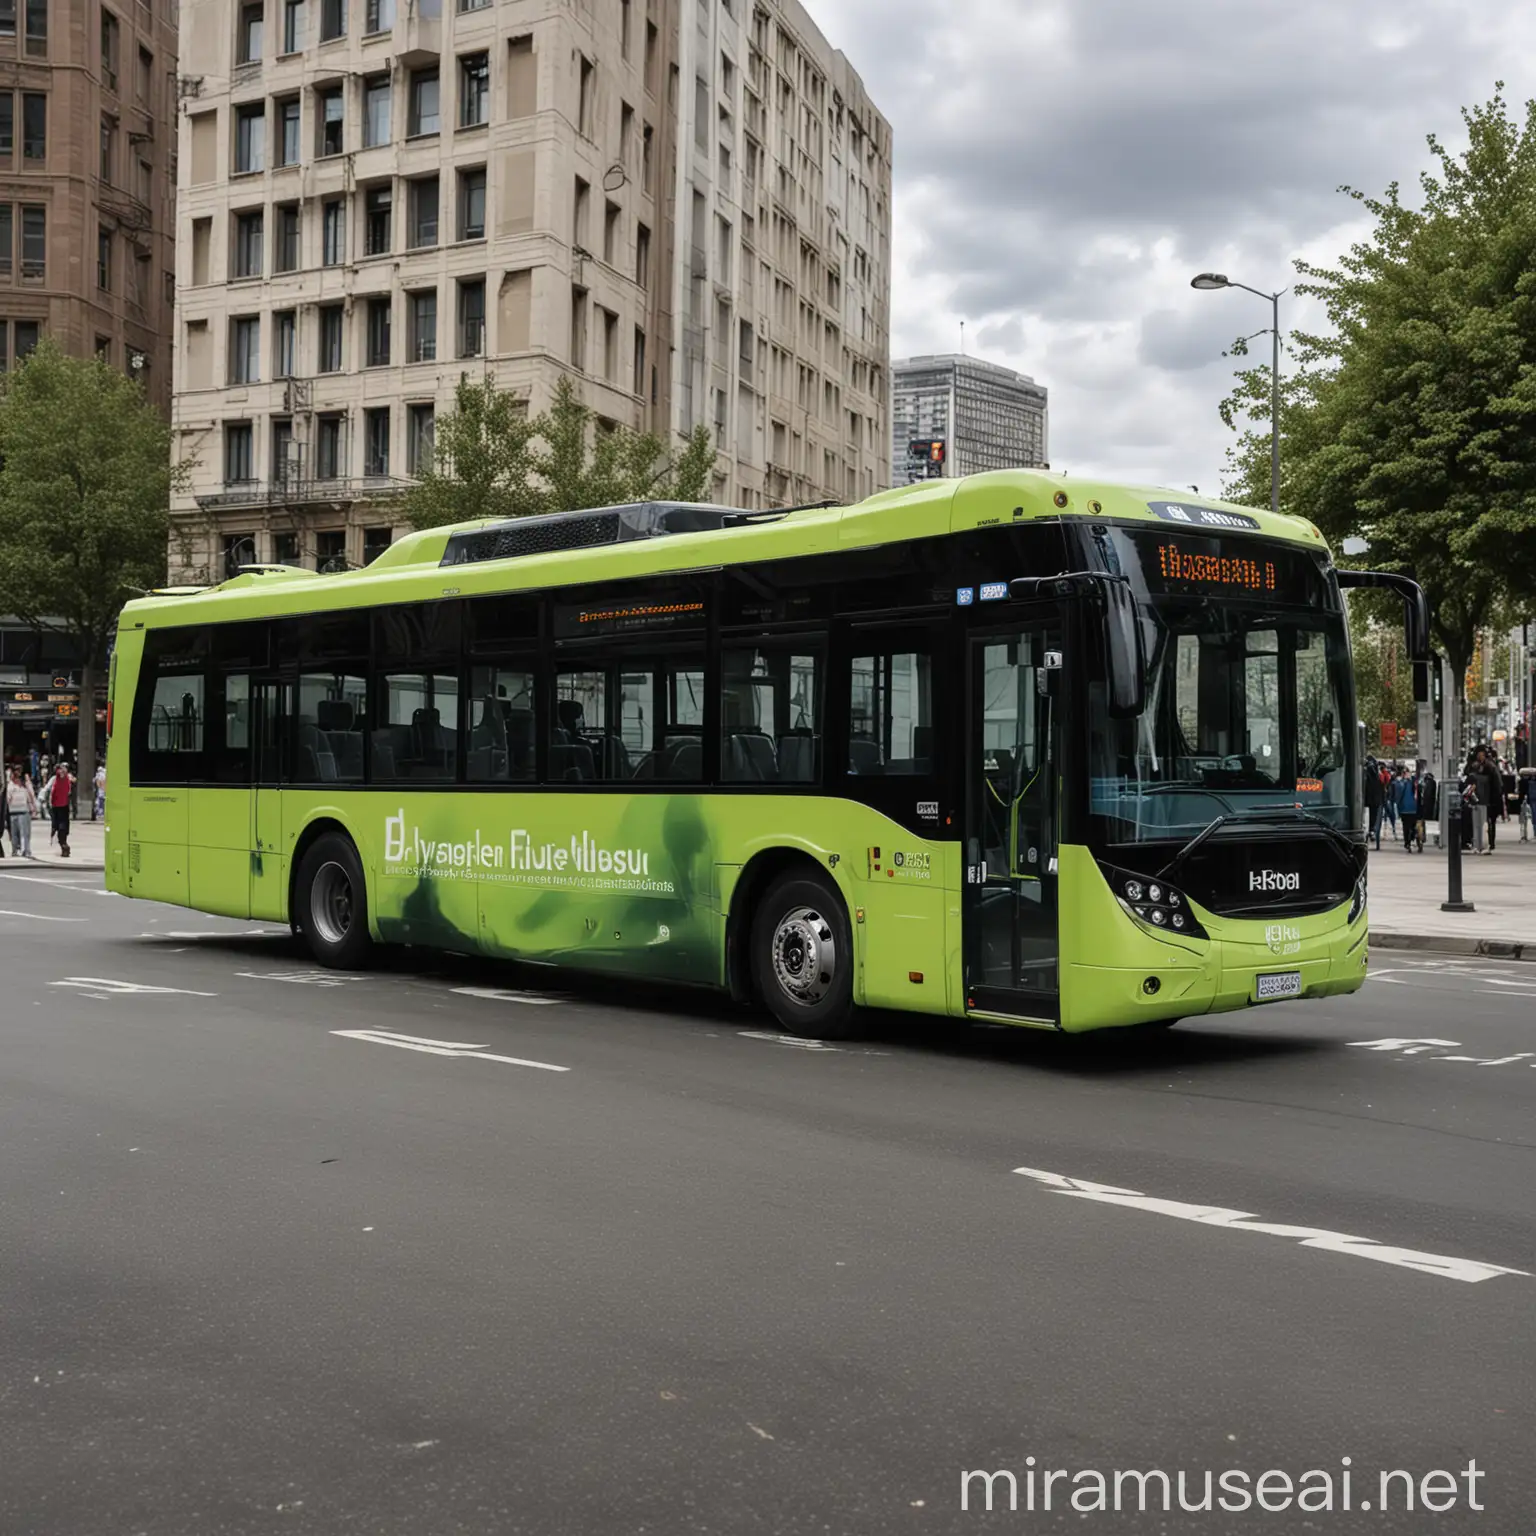  hydrogen fuel bus

 